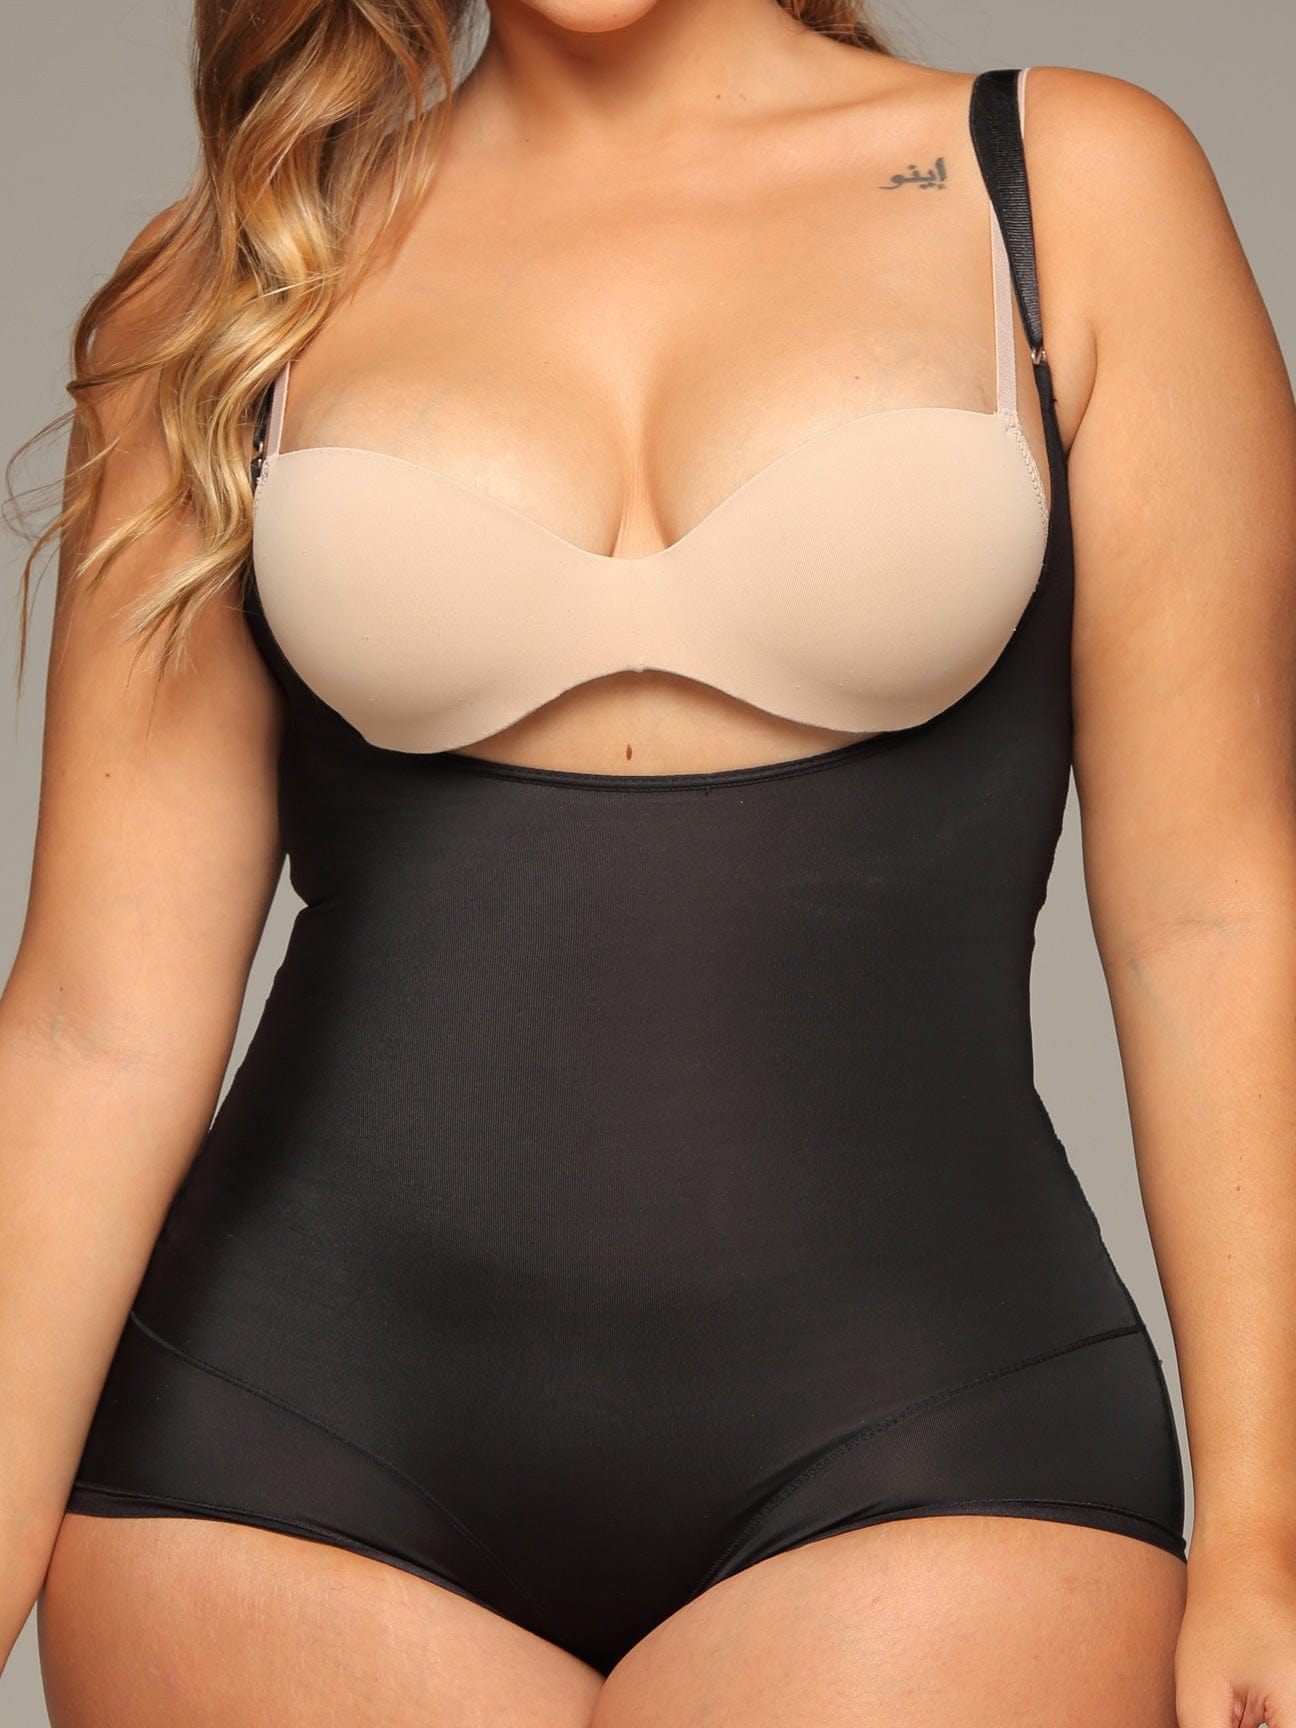 Colombian Full Body Flatten Low Waist Body Shaper With Short Sleeves High Slimming  Bodysuit Underwear For Women 230520 From You07, $36.56